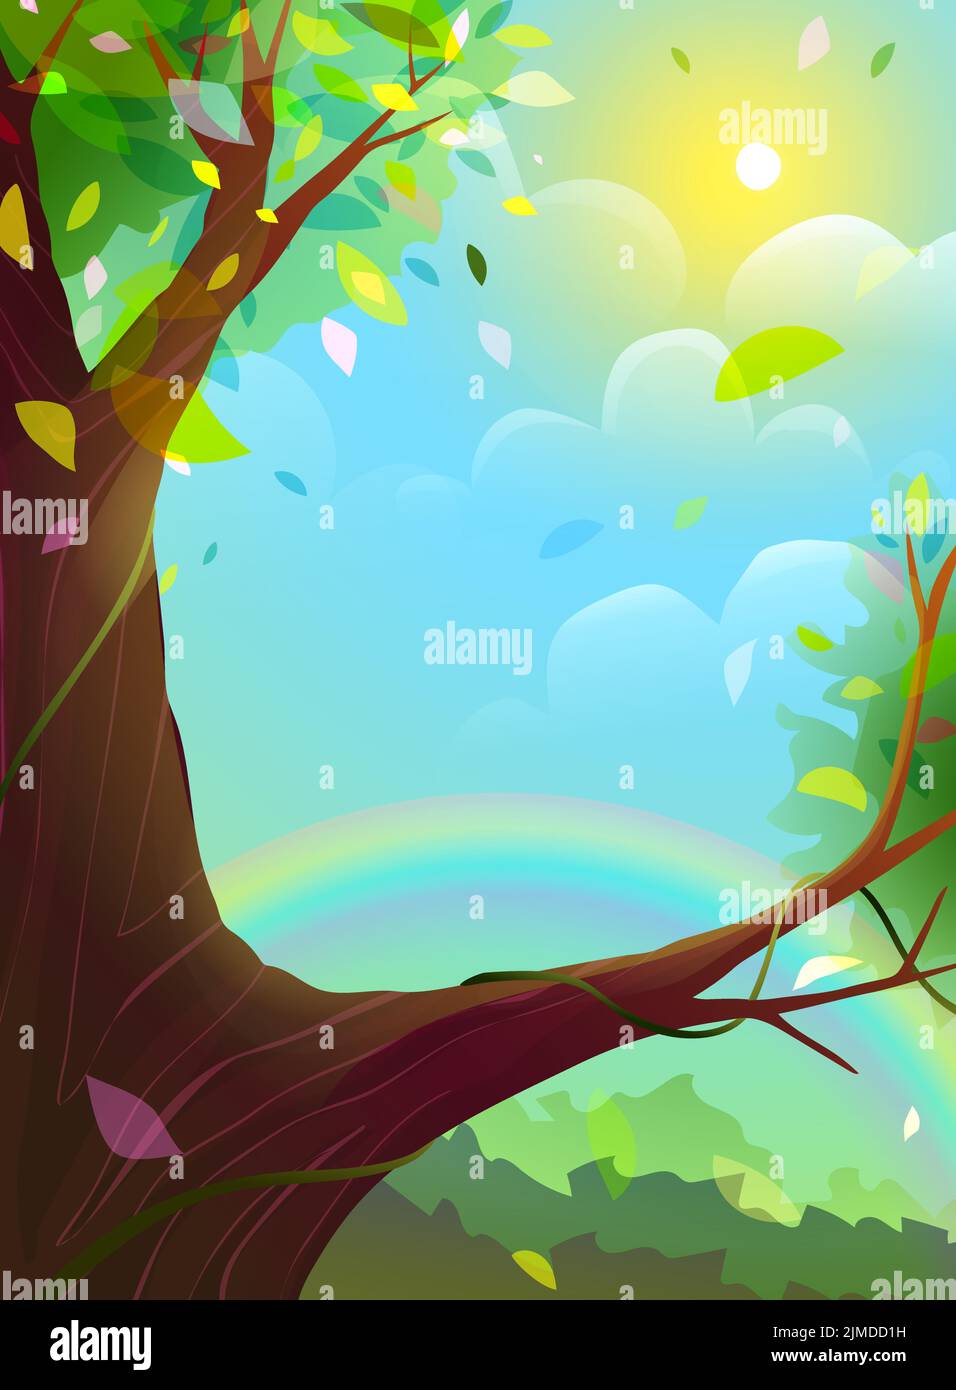 Dreamlike Summer Scenery with Big Tree and Rainbow Stock Vector